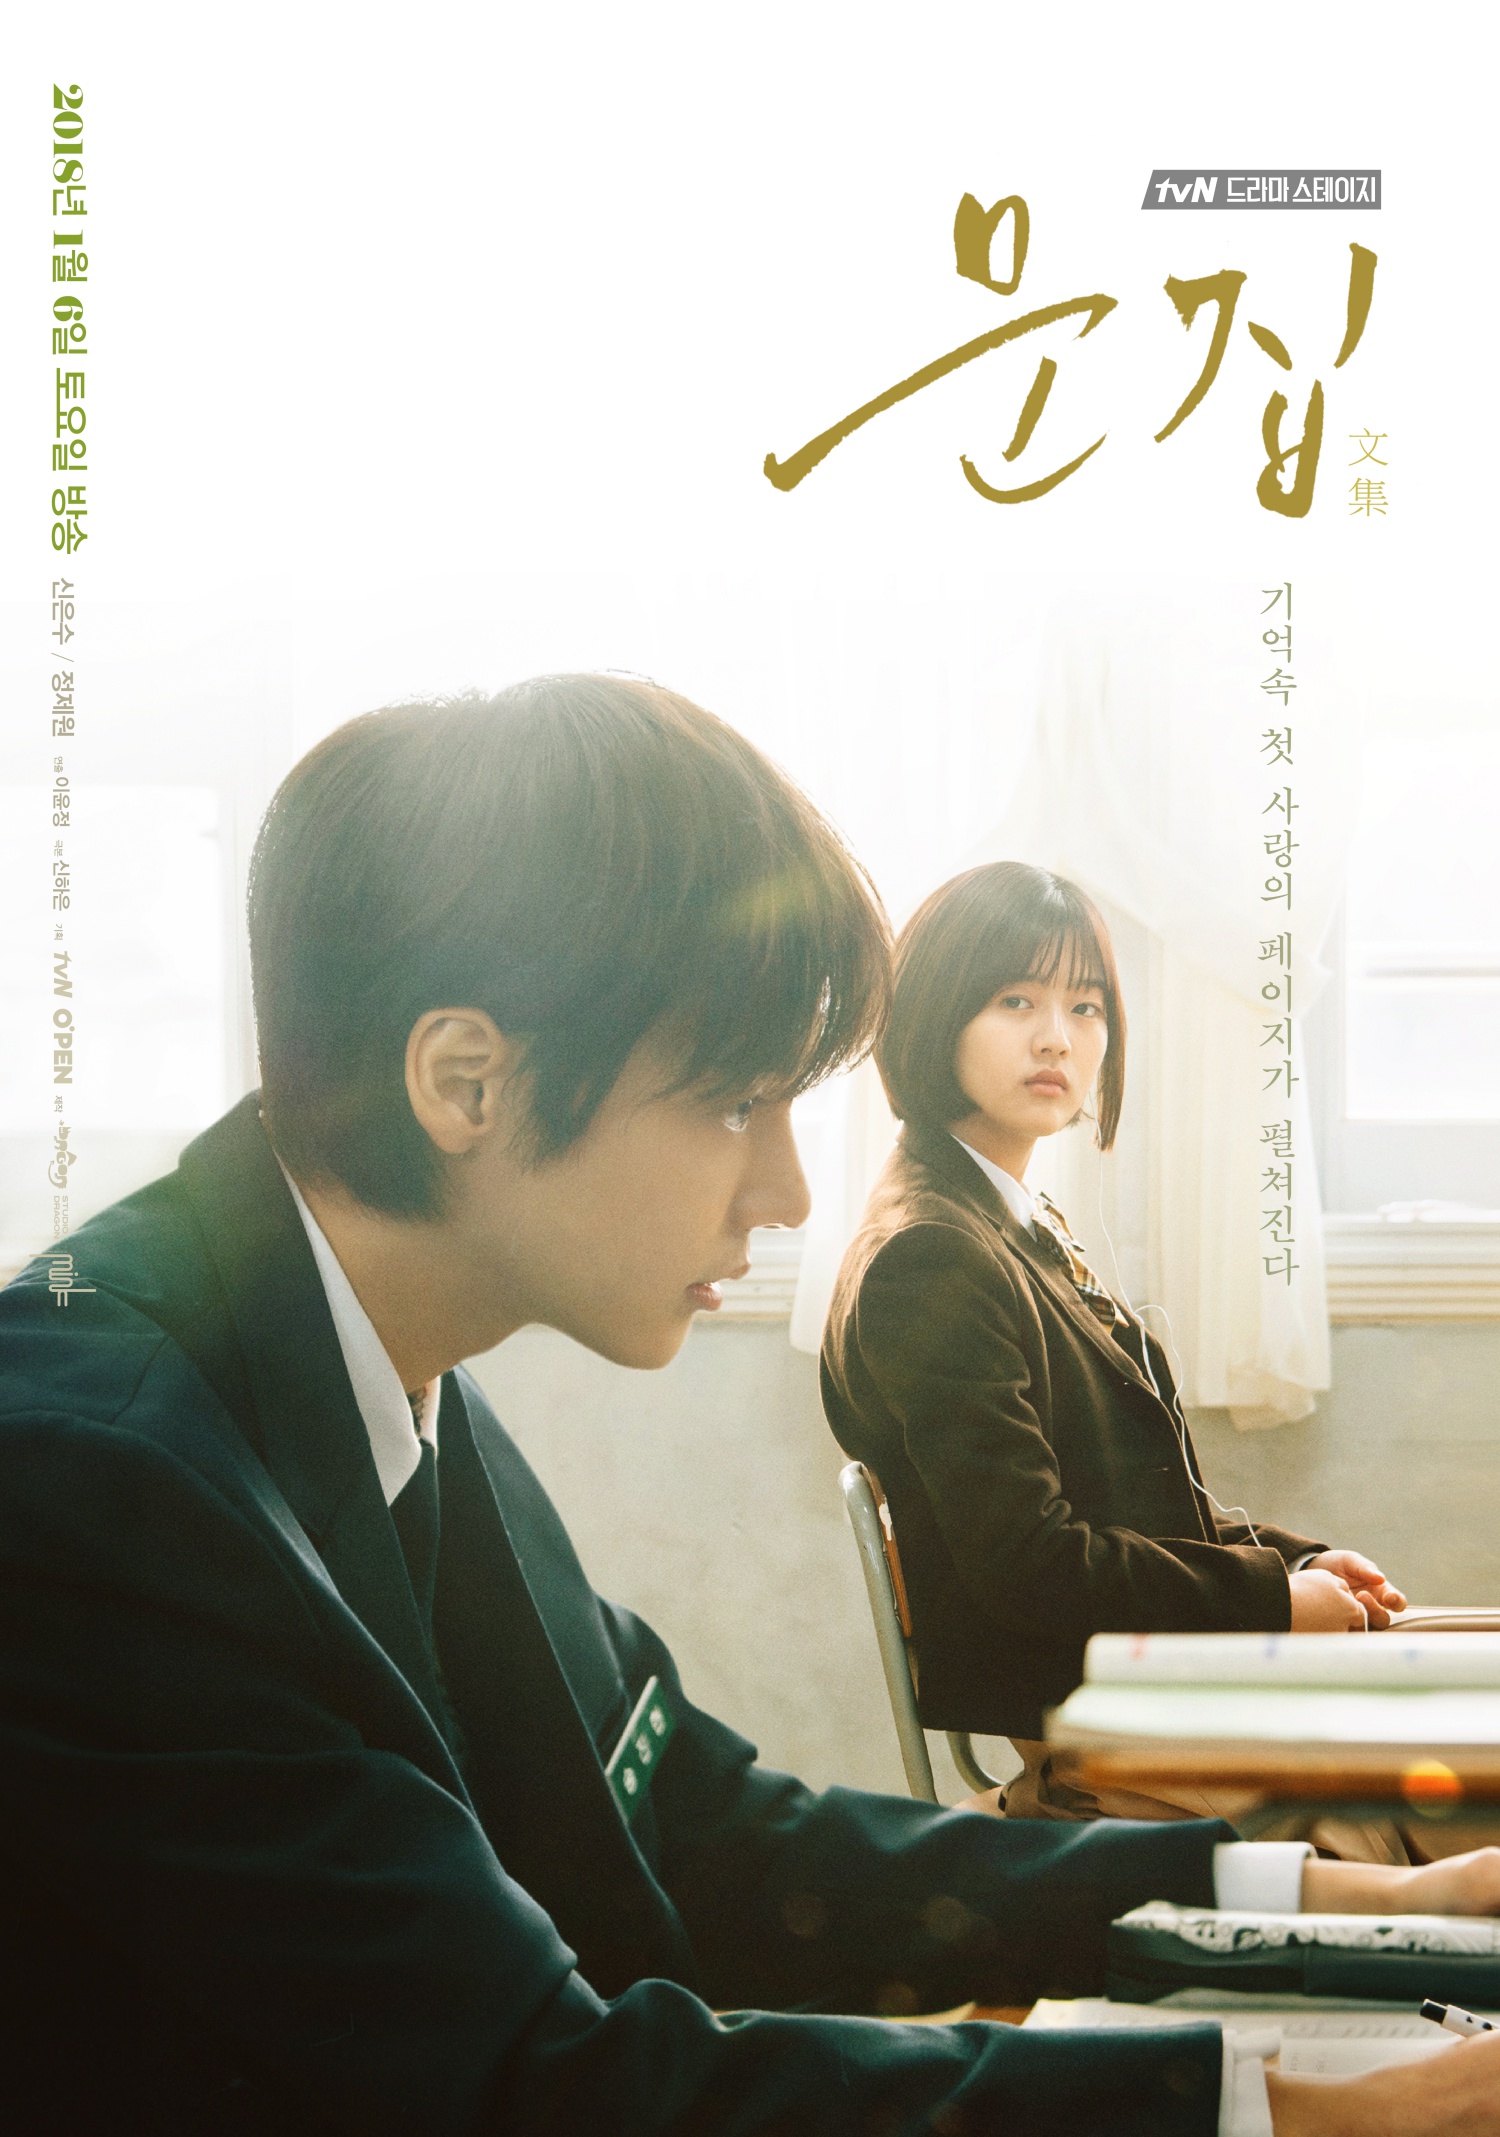 Teaser trailer for tvN drama special “Anthology” | AsianWiki Blog